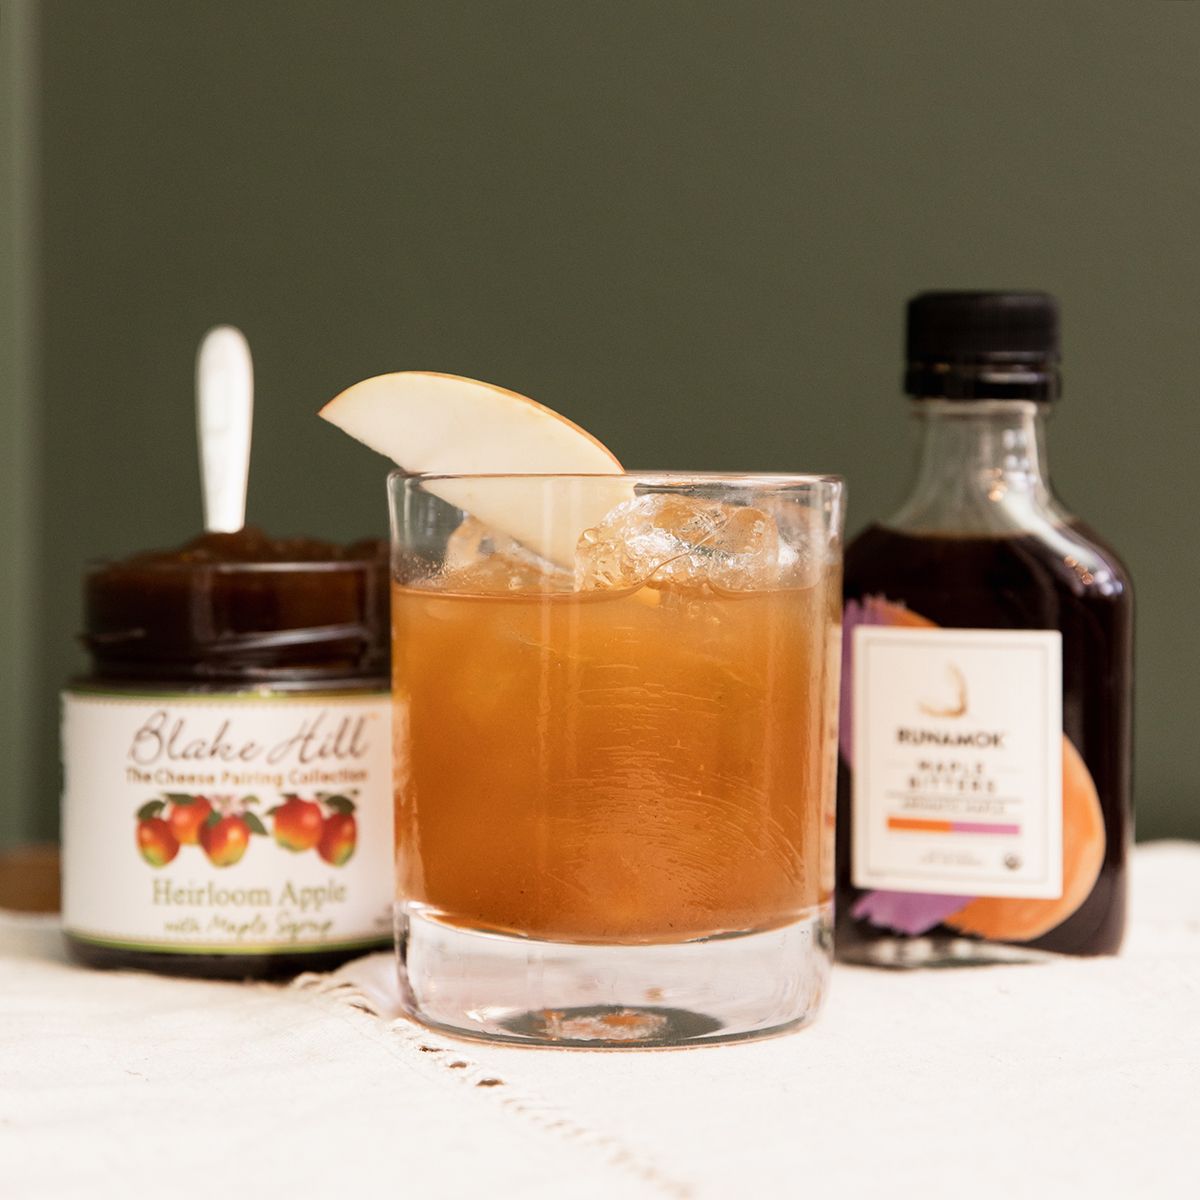 BHill Runamok Apple Aromatic Cocktail 10